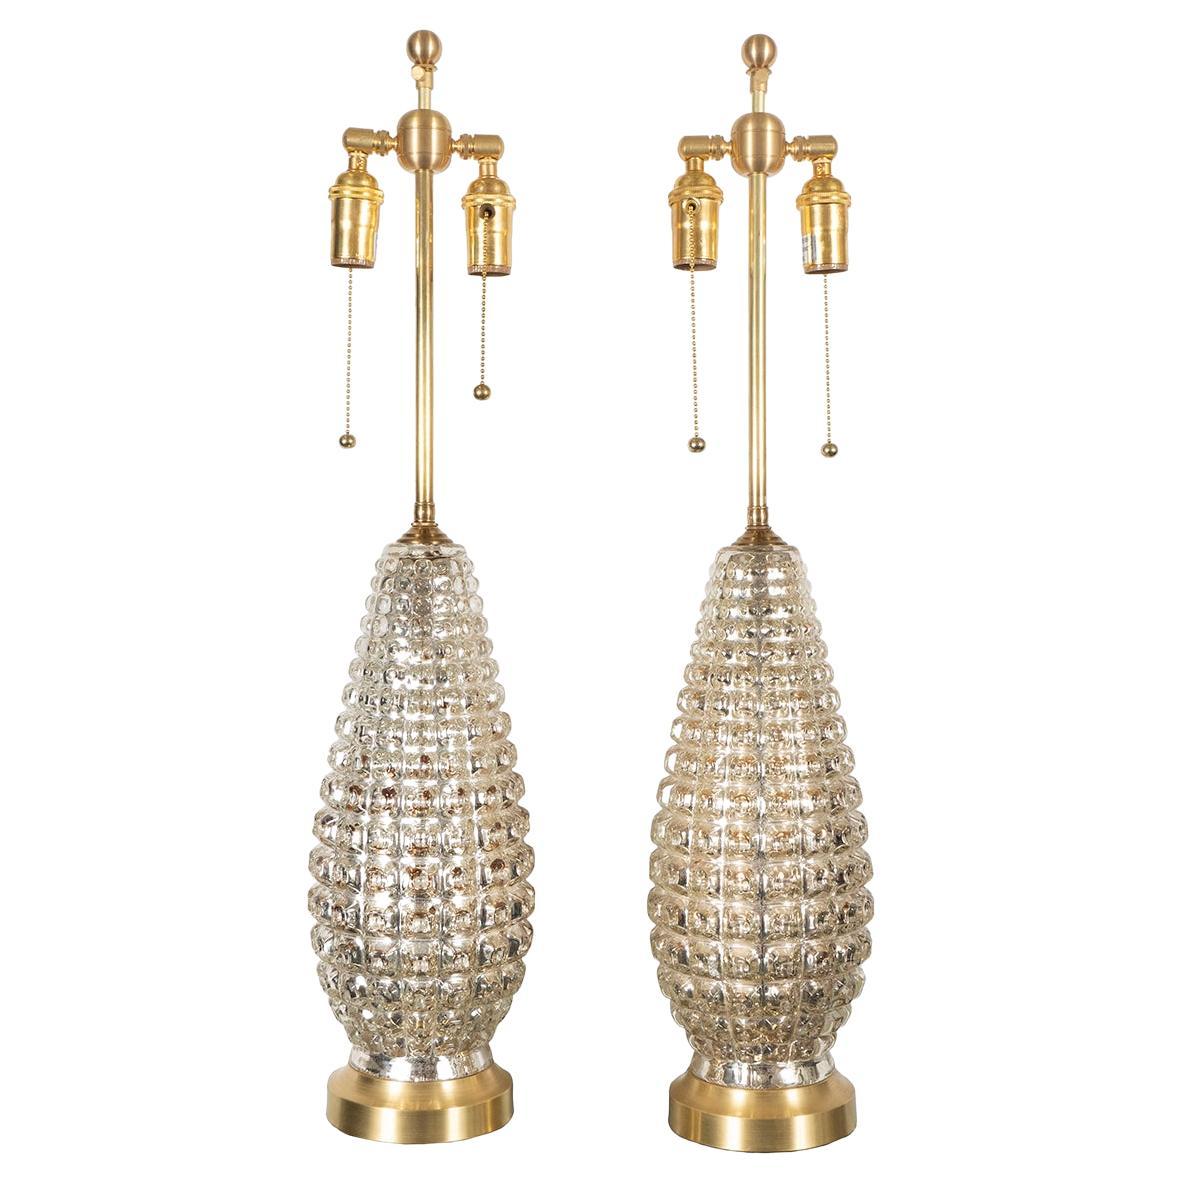 Pair of Teardrop Mercury Glass Lamps